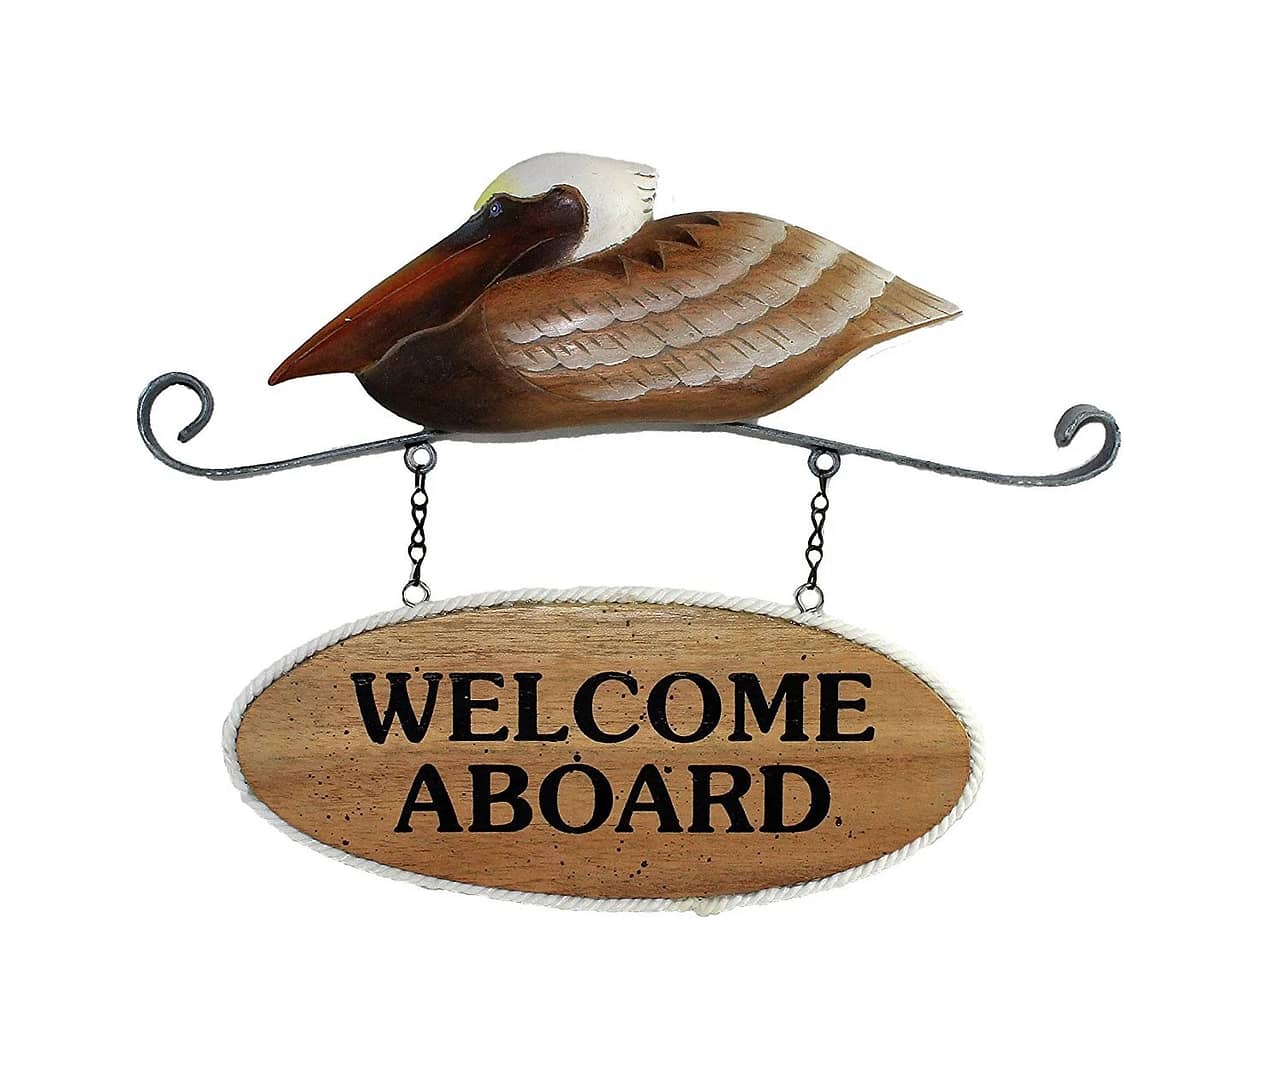 12"H Metal & Wood Pelican Welcome Aboard Wall Sign